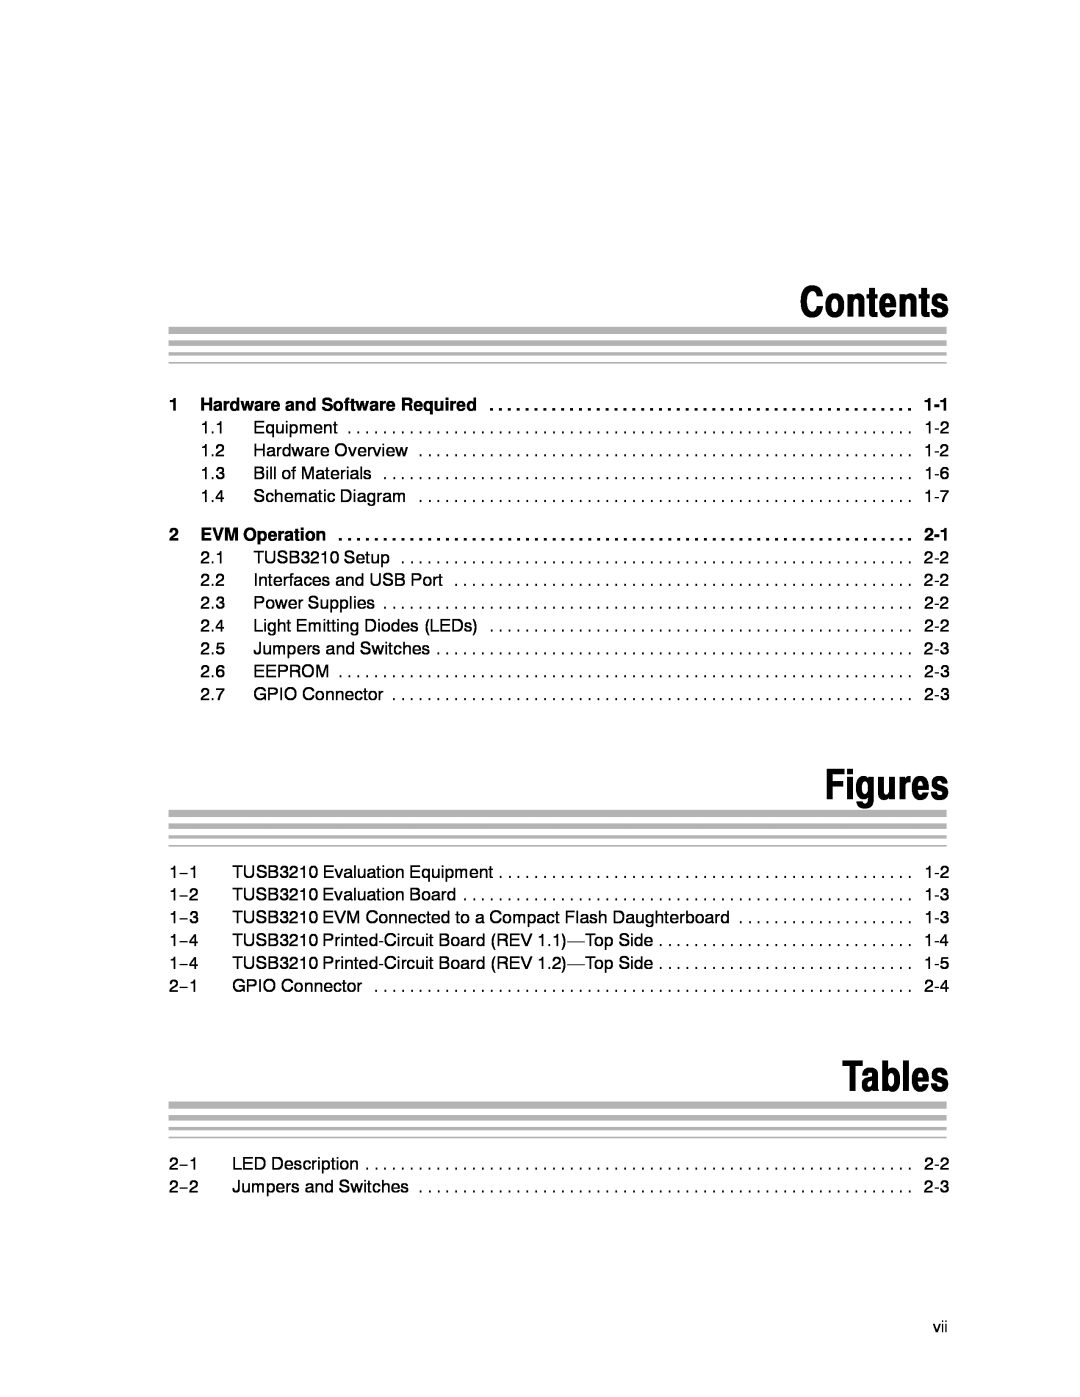 Texas Instruments TUSB3210 manual Contents, Figures, Tables, EVM Operation 